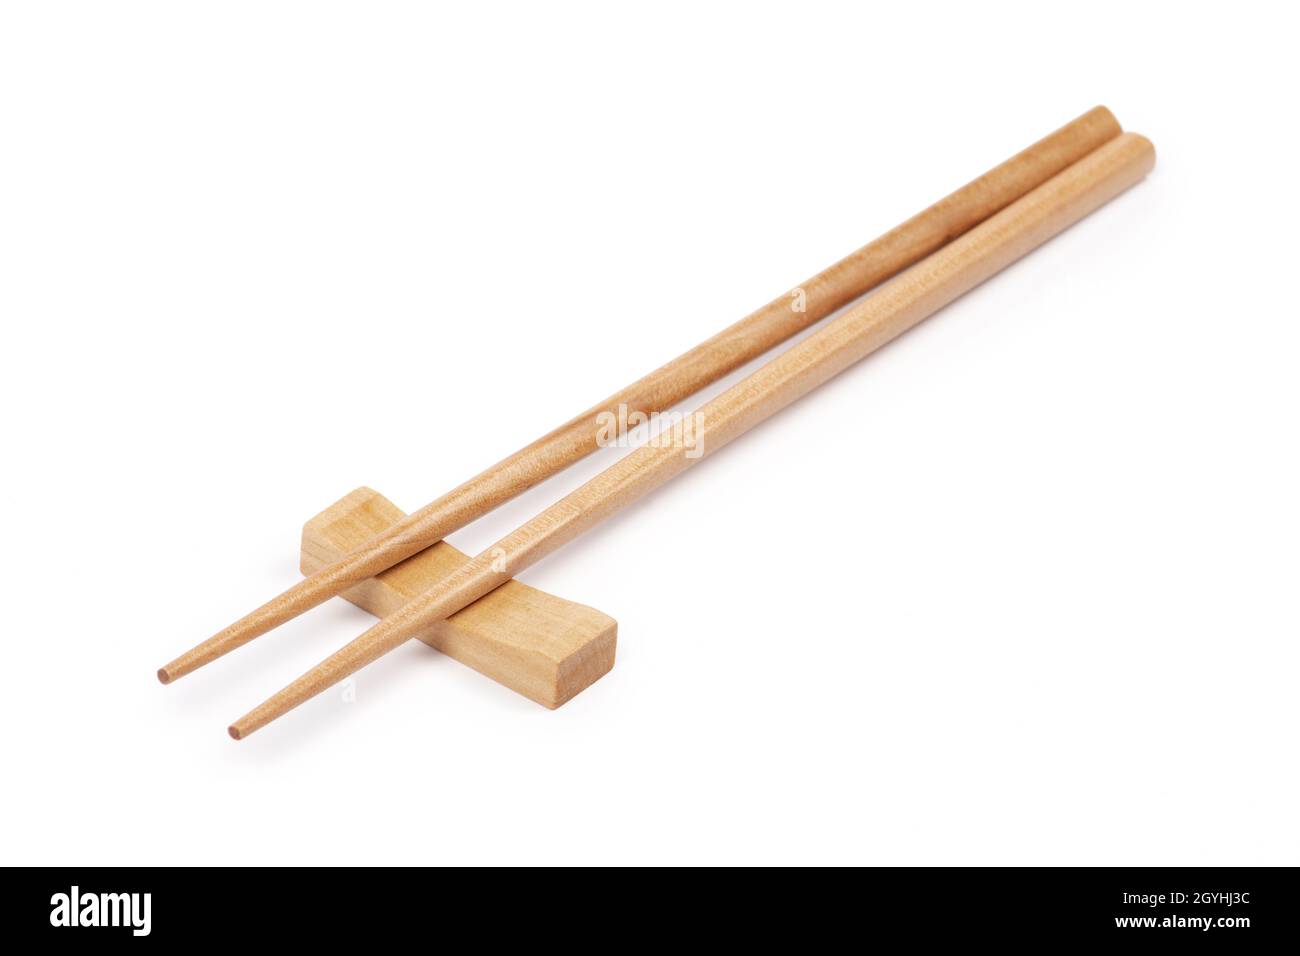 Wooden chopsticks isolated on white background Stock Photo